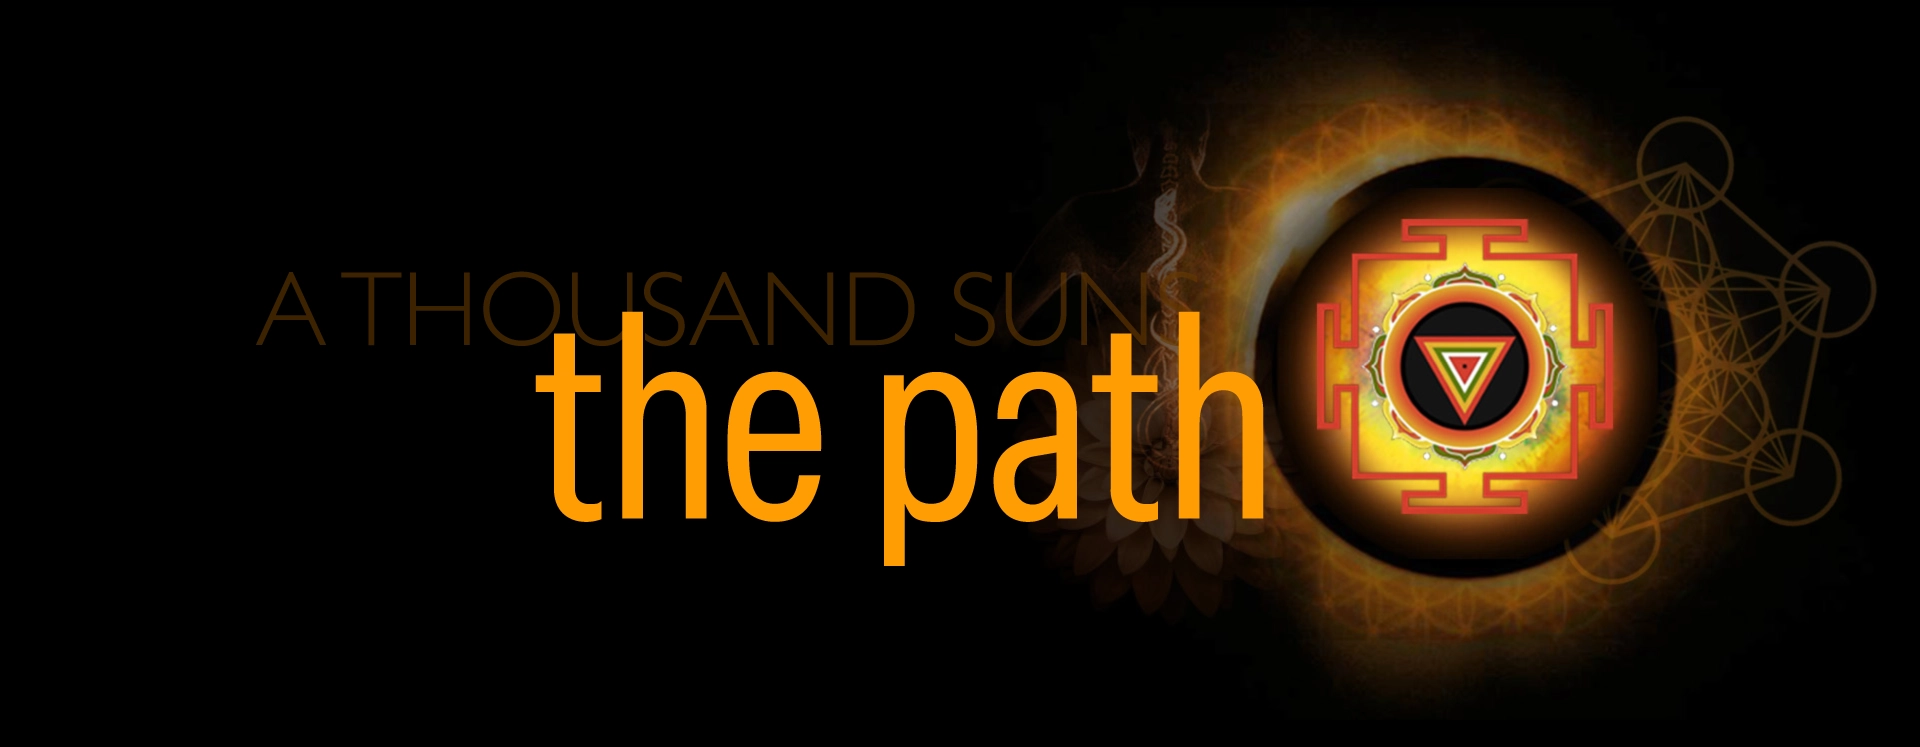 the path image